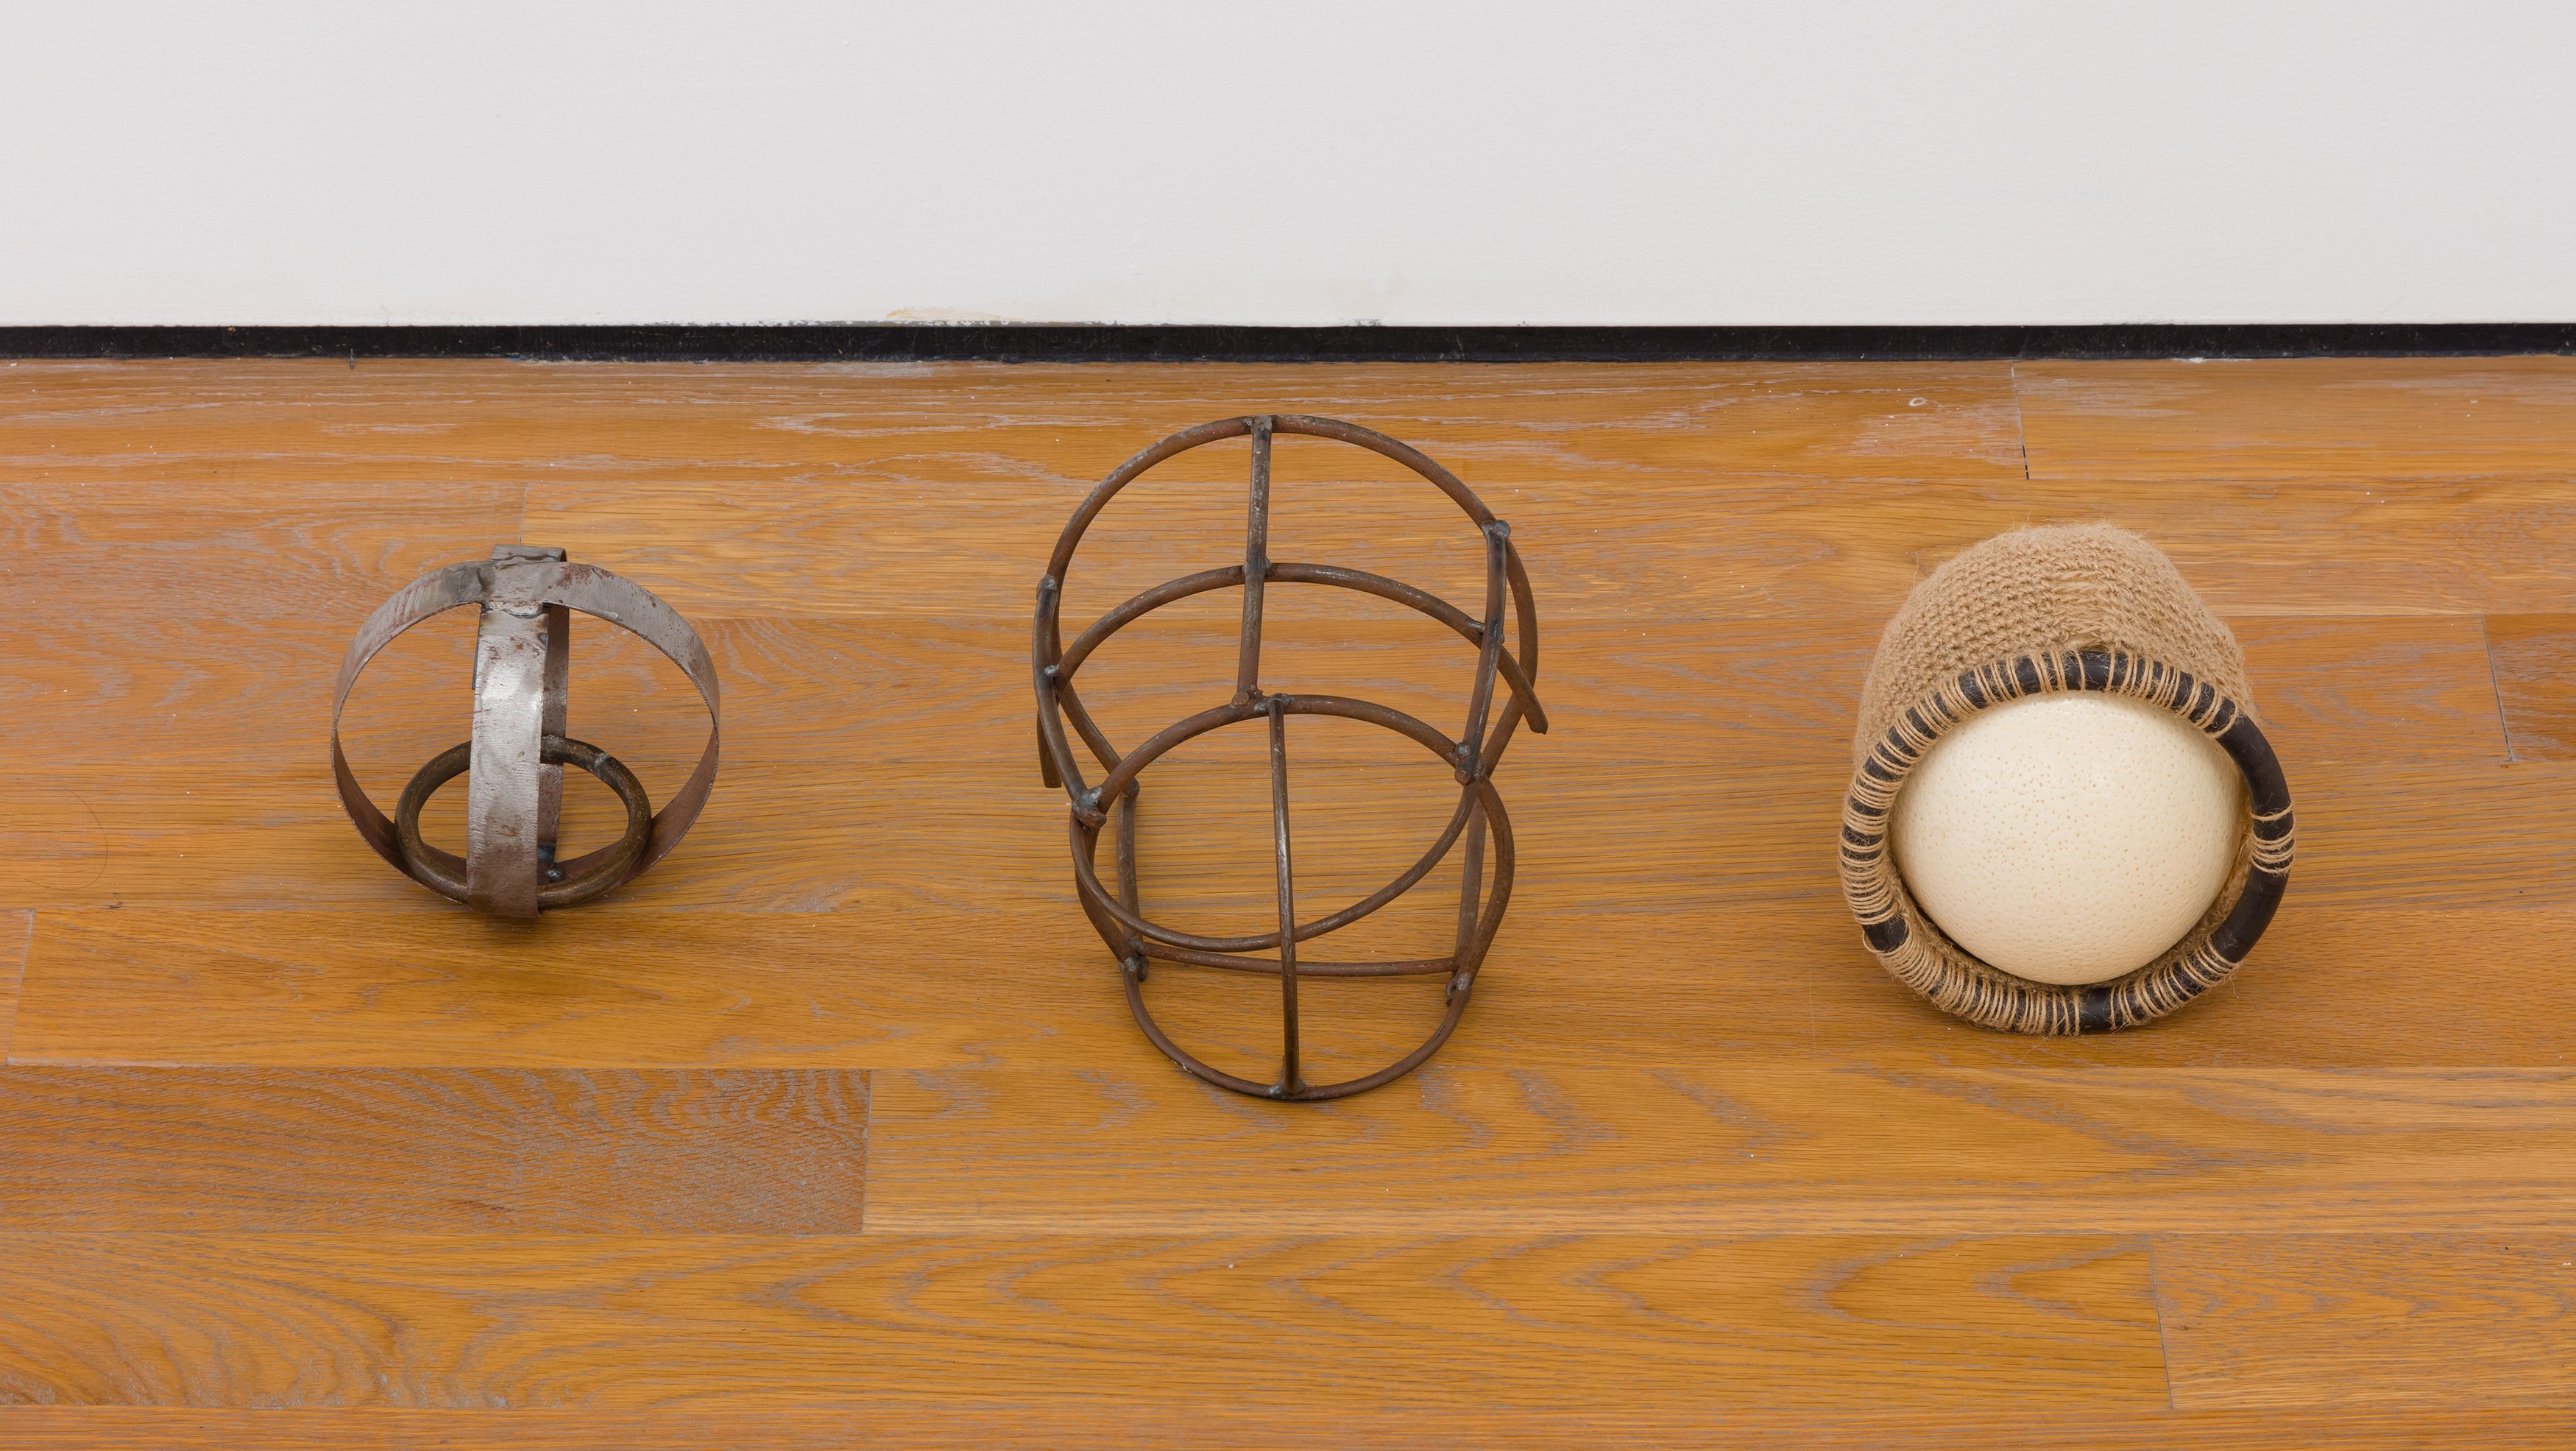 ektor garcia, esfera bozal huevo, 2020, welded steel, brass, ostrich egg, and crochet henequen, 7 x 26 x 9 in. (17.78 x 66.04 x 22.86 cm)  